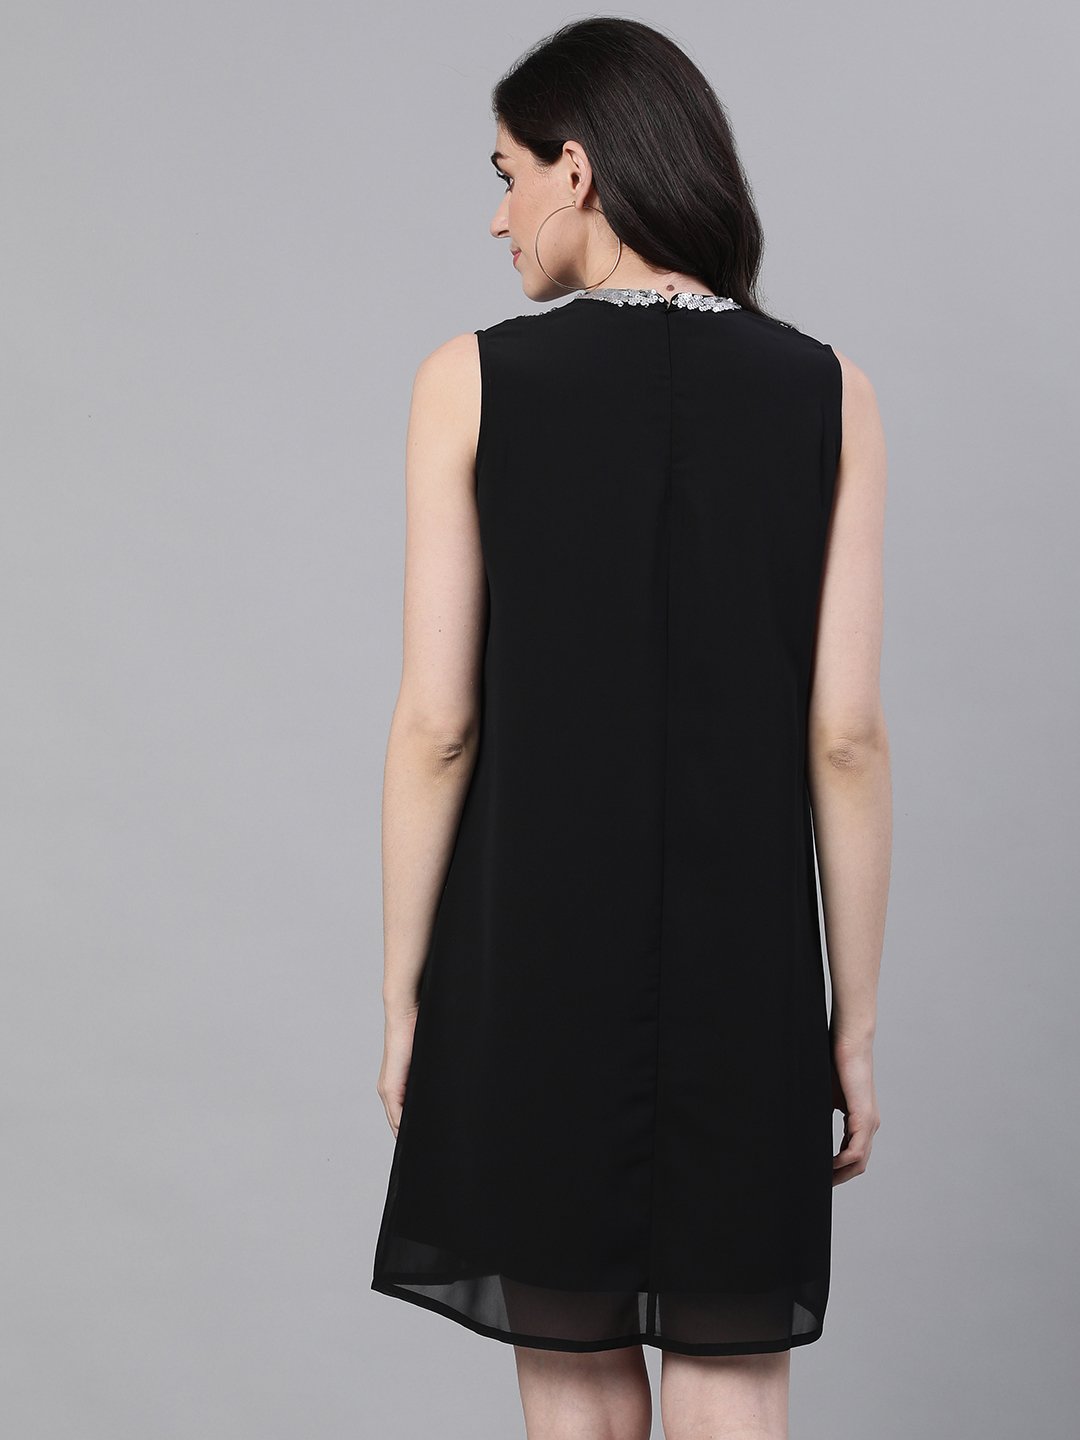 Ishin Women's Poly Crepe Black Solid Jewel Neck A-Line Dress